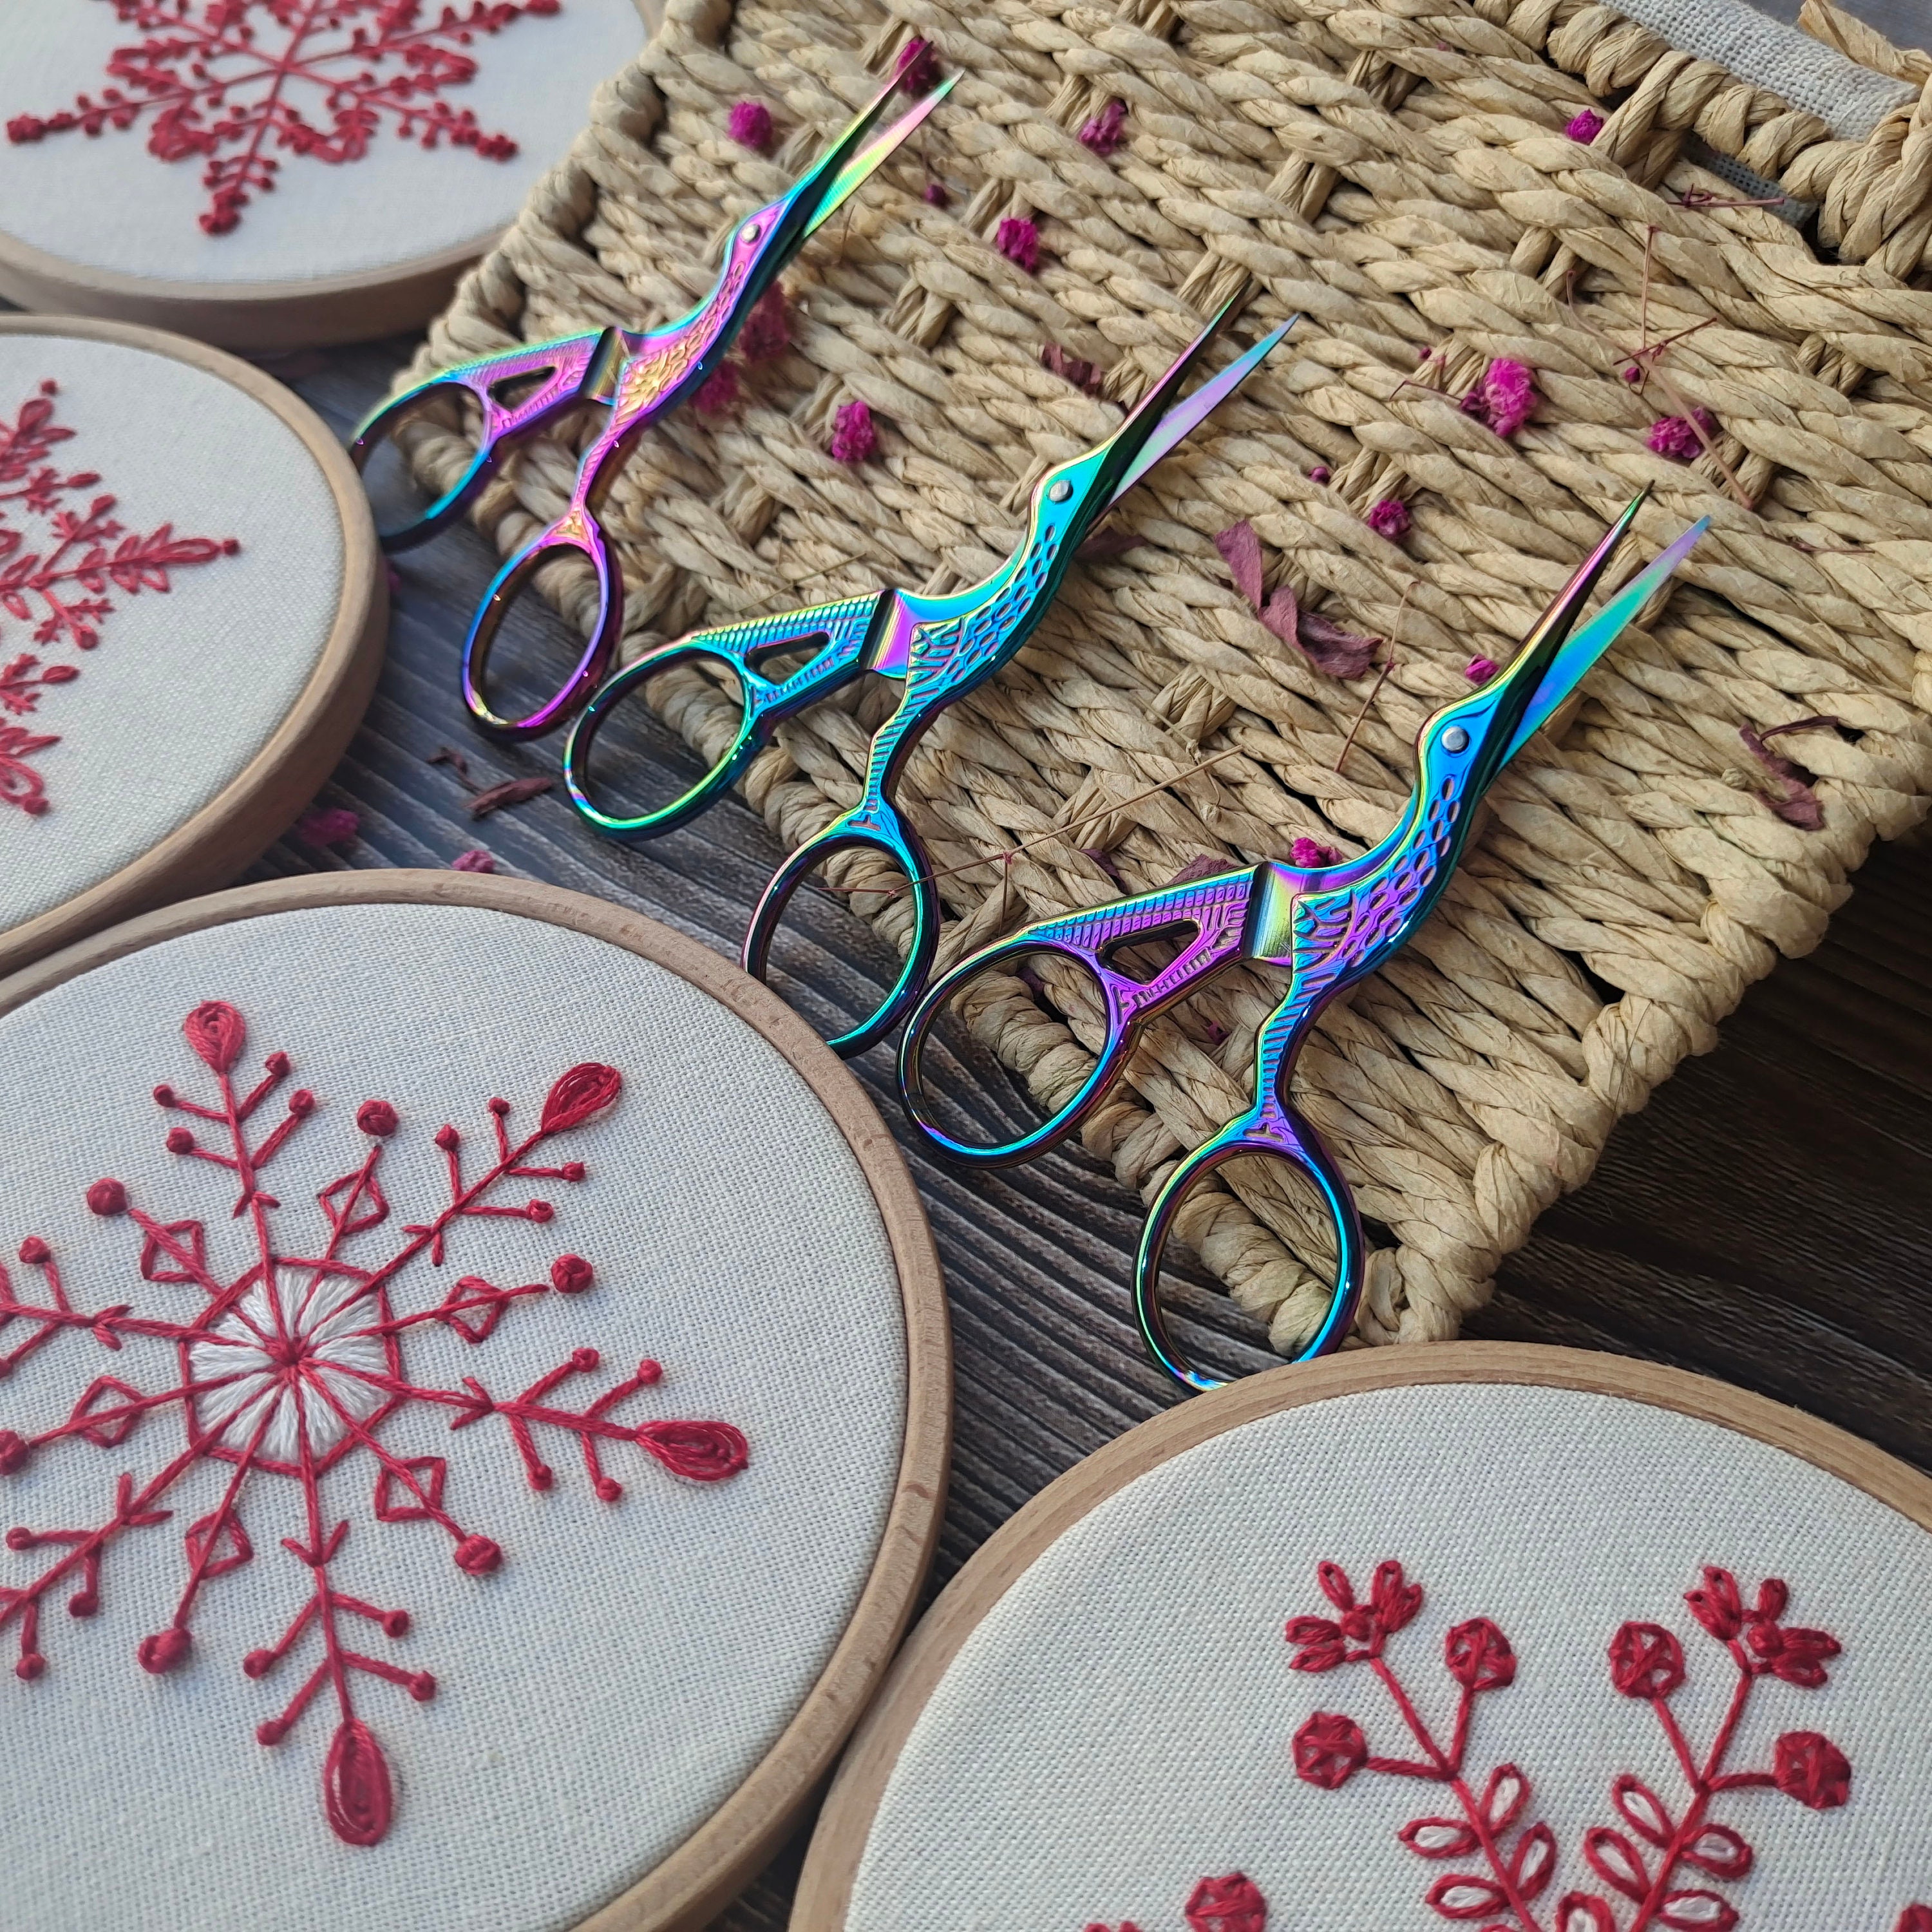 TLKKUE Small DIY Sewing Scissors Thread Embroidery Cross-stitch